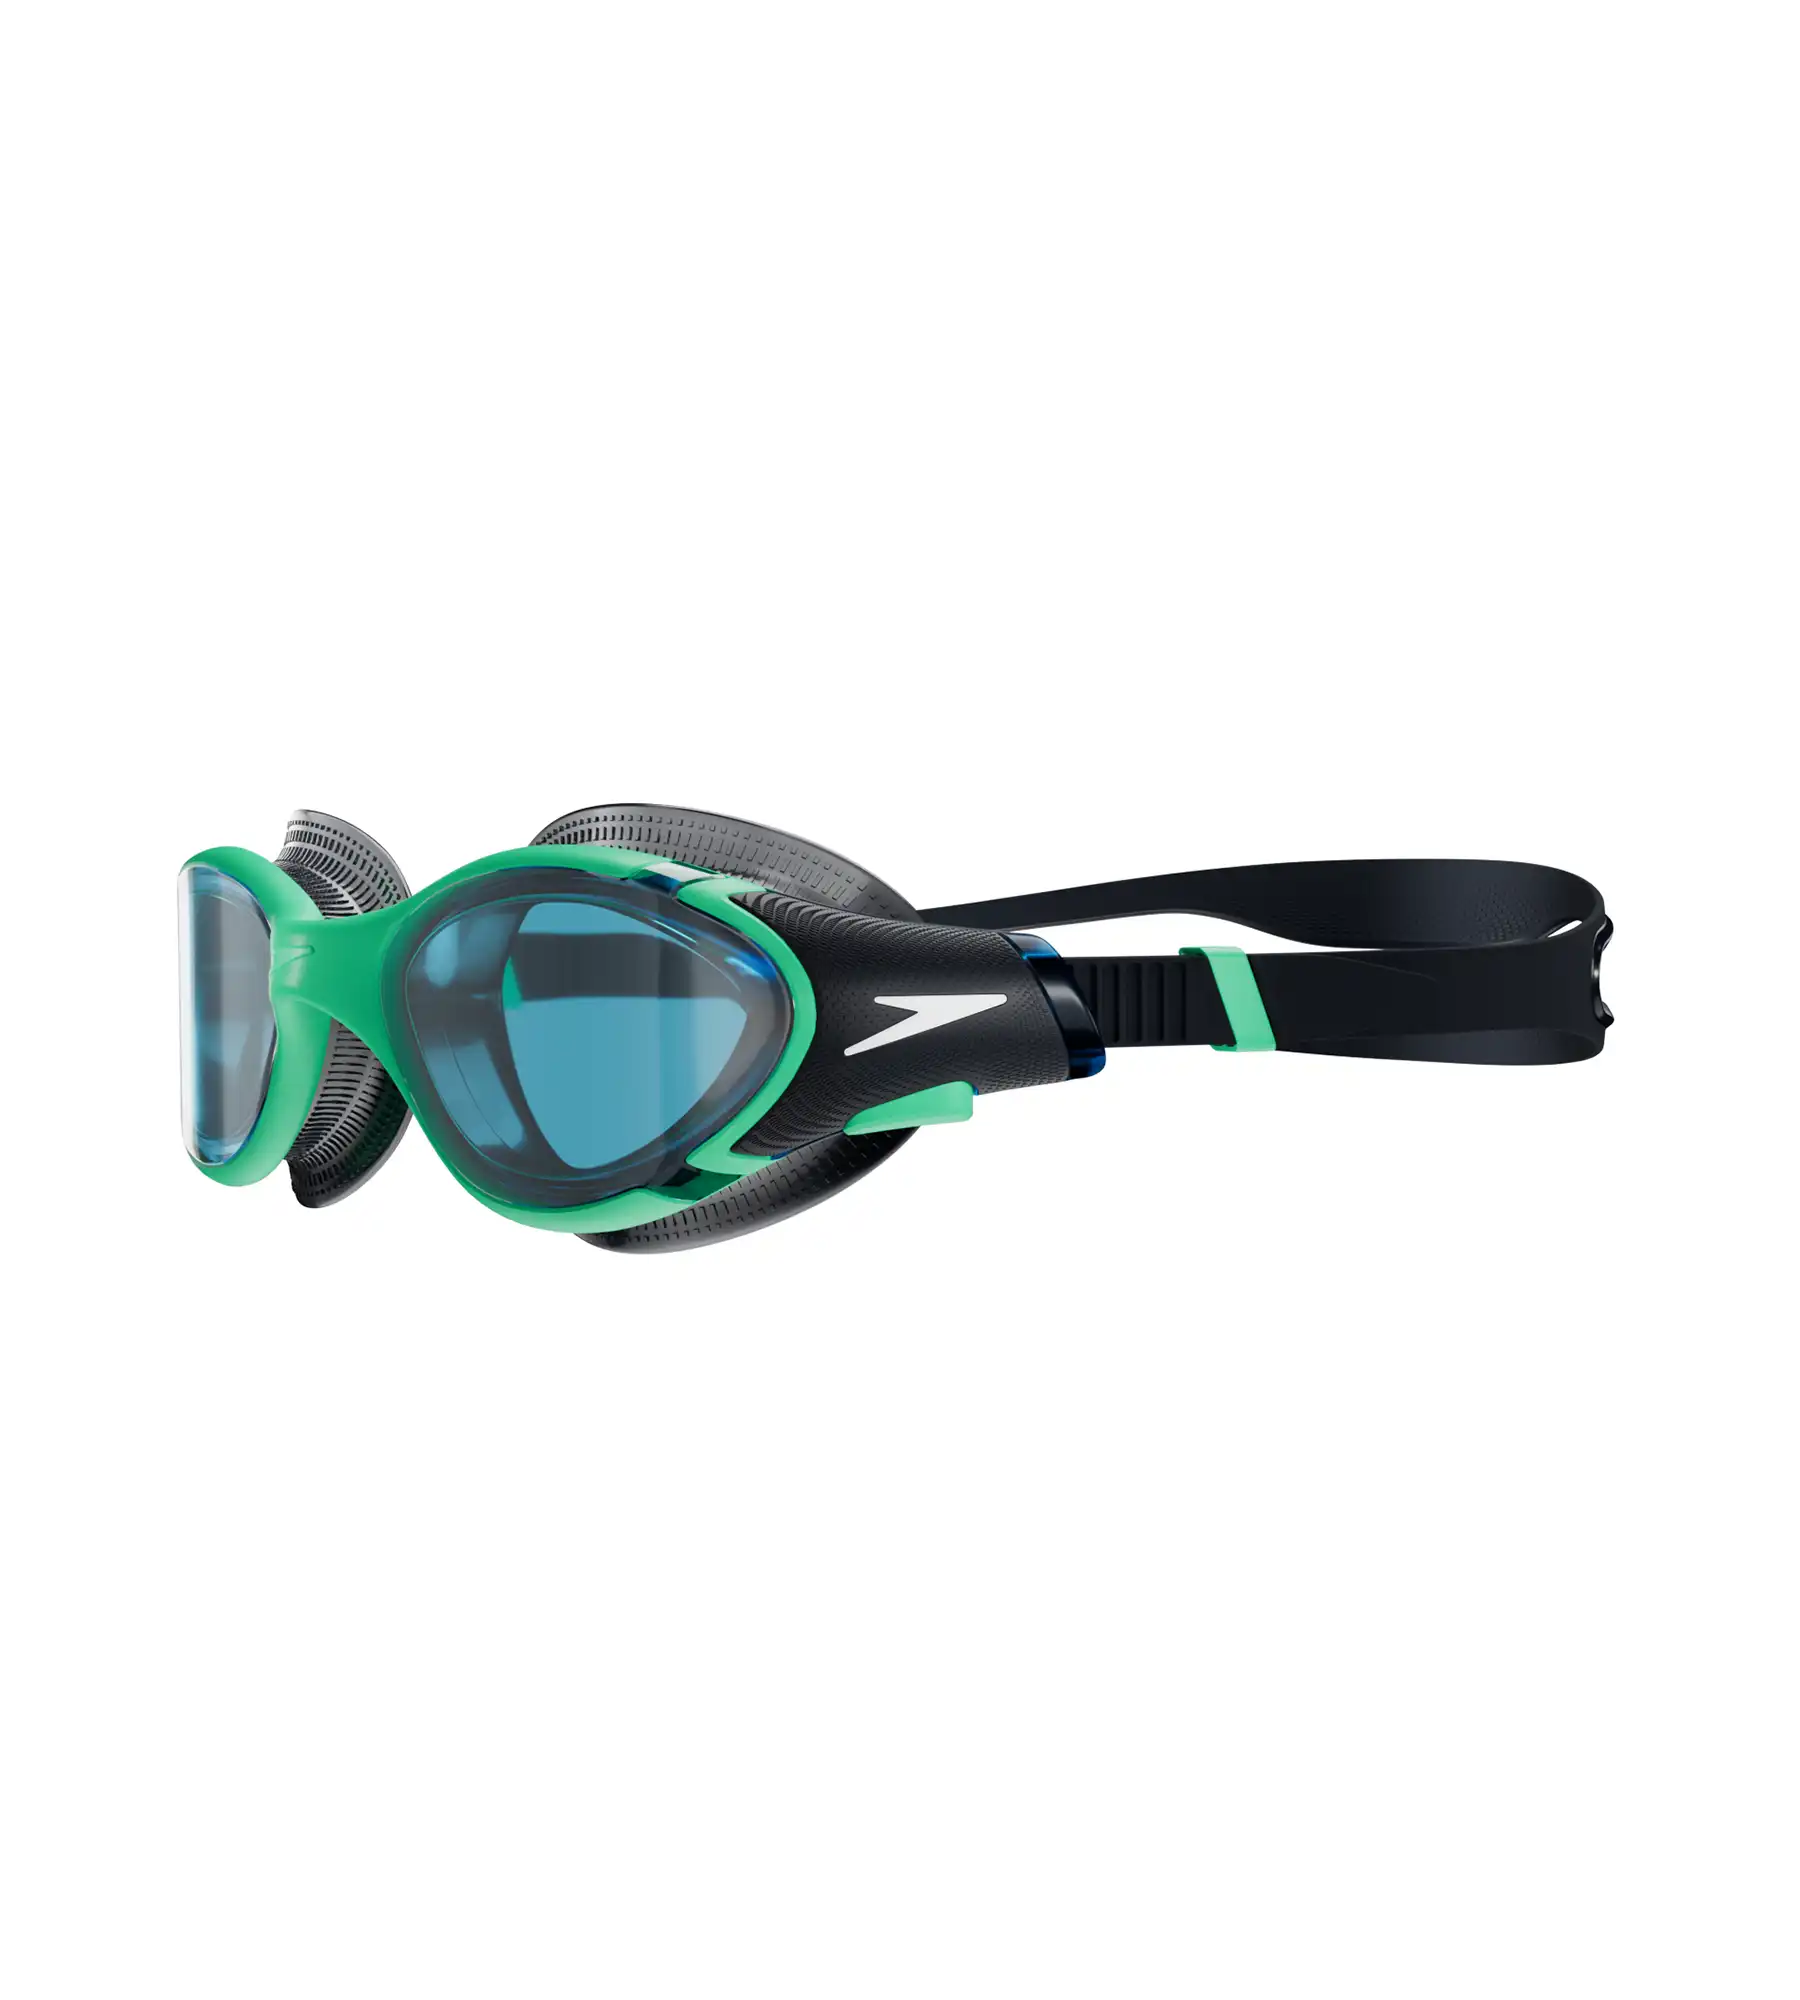 Unisex Adult Biofuse 2.0 Tint-Lens Swim Goggles - Green & Blue_2